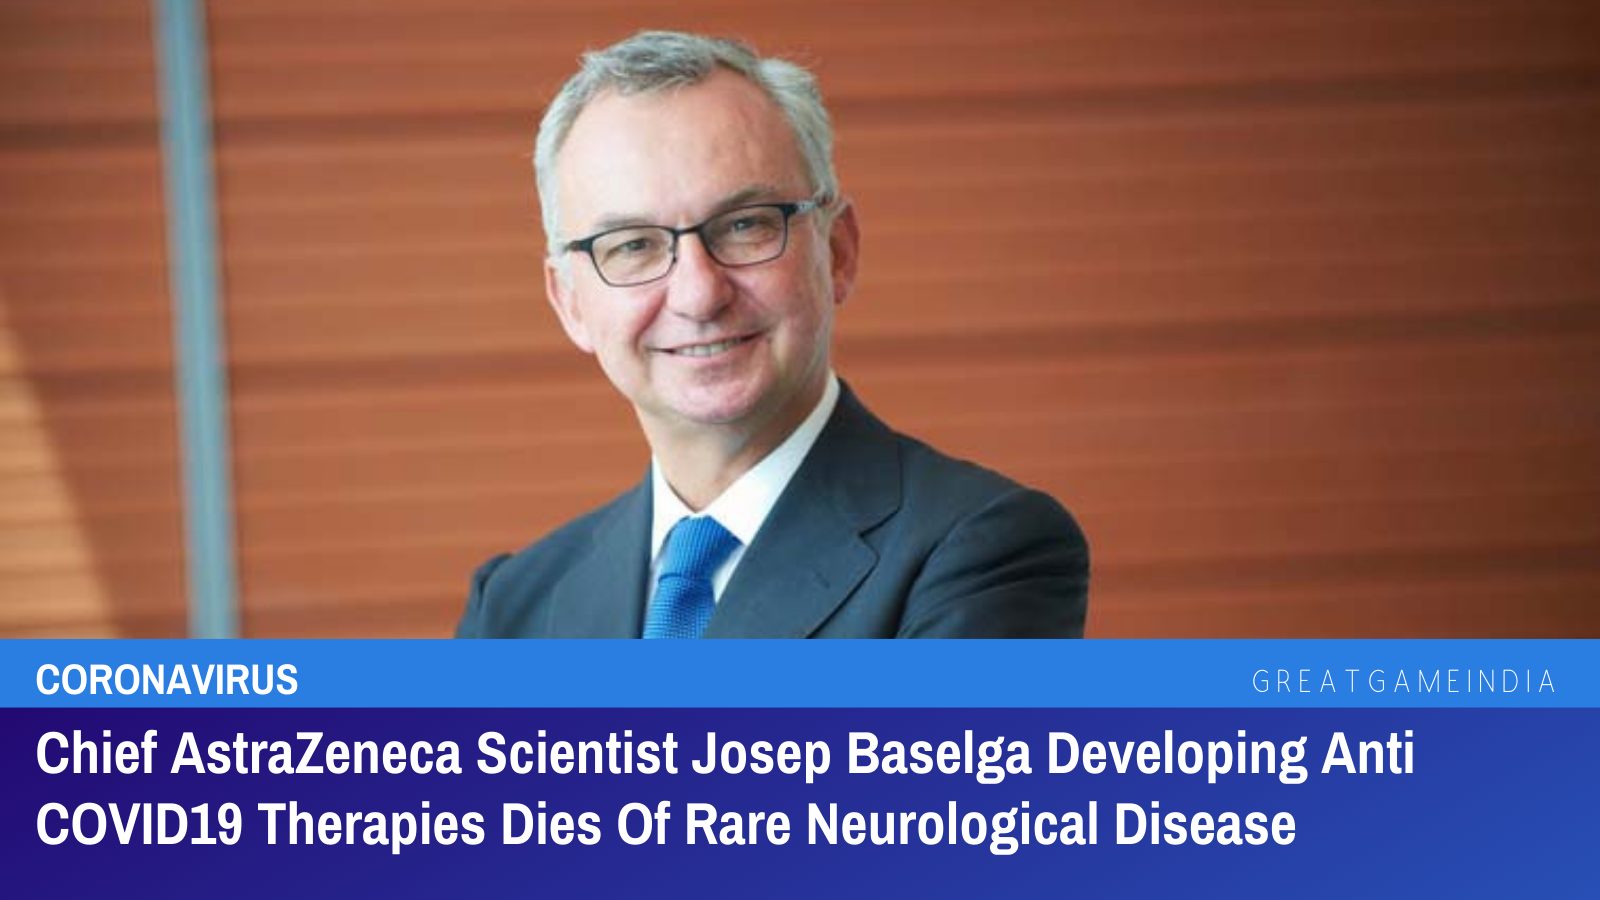 Chief AstraZeneca Scientist Josep Baselga Developing Anti COVID-19 Therapies Dies Of Rare Neurological Disease